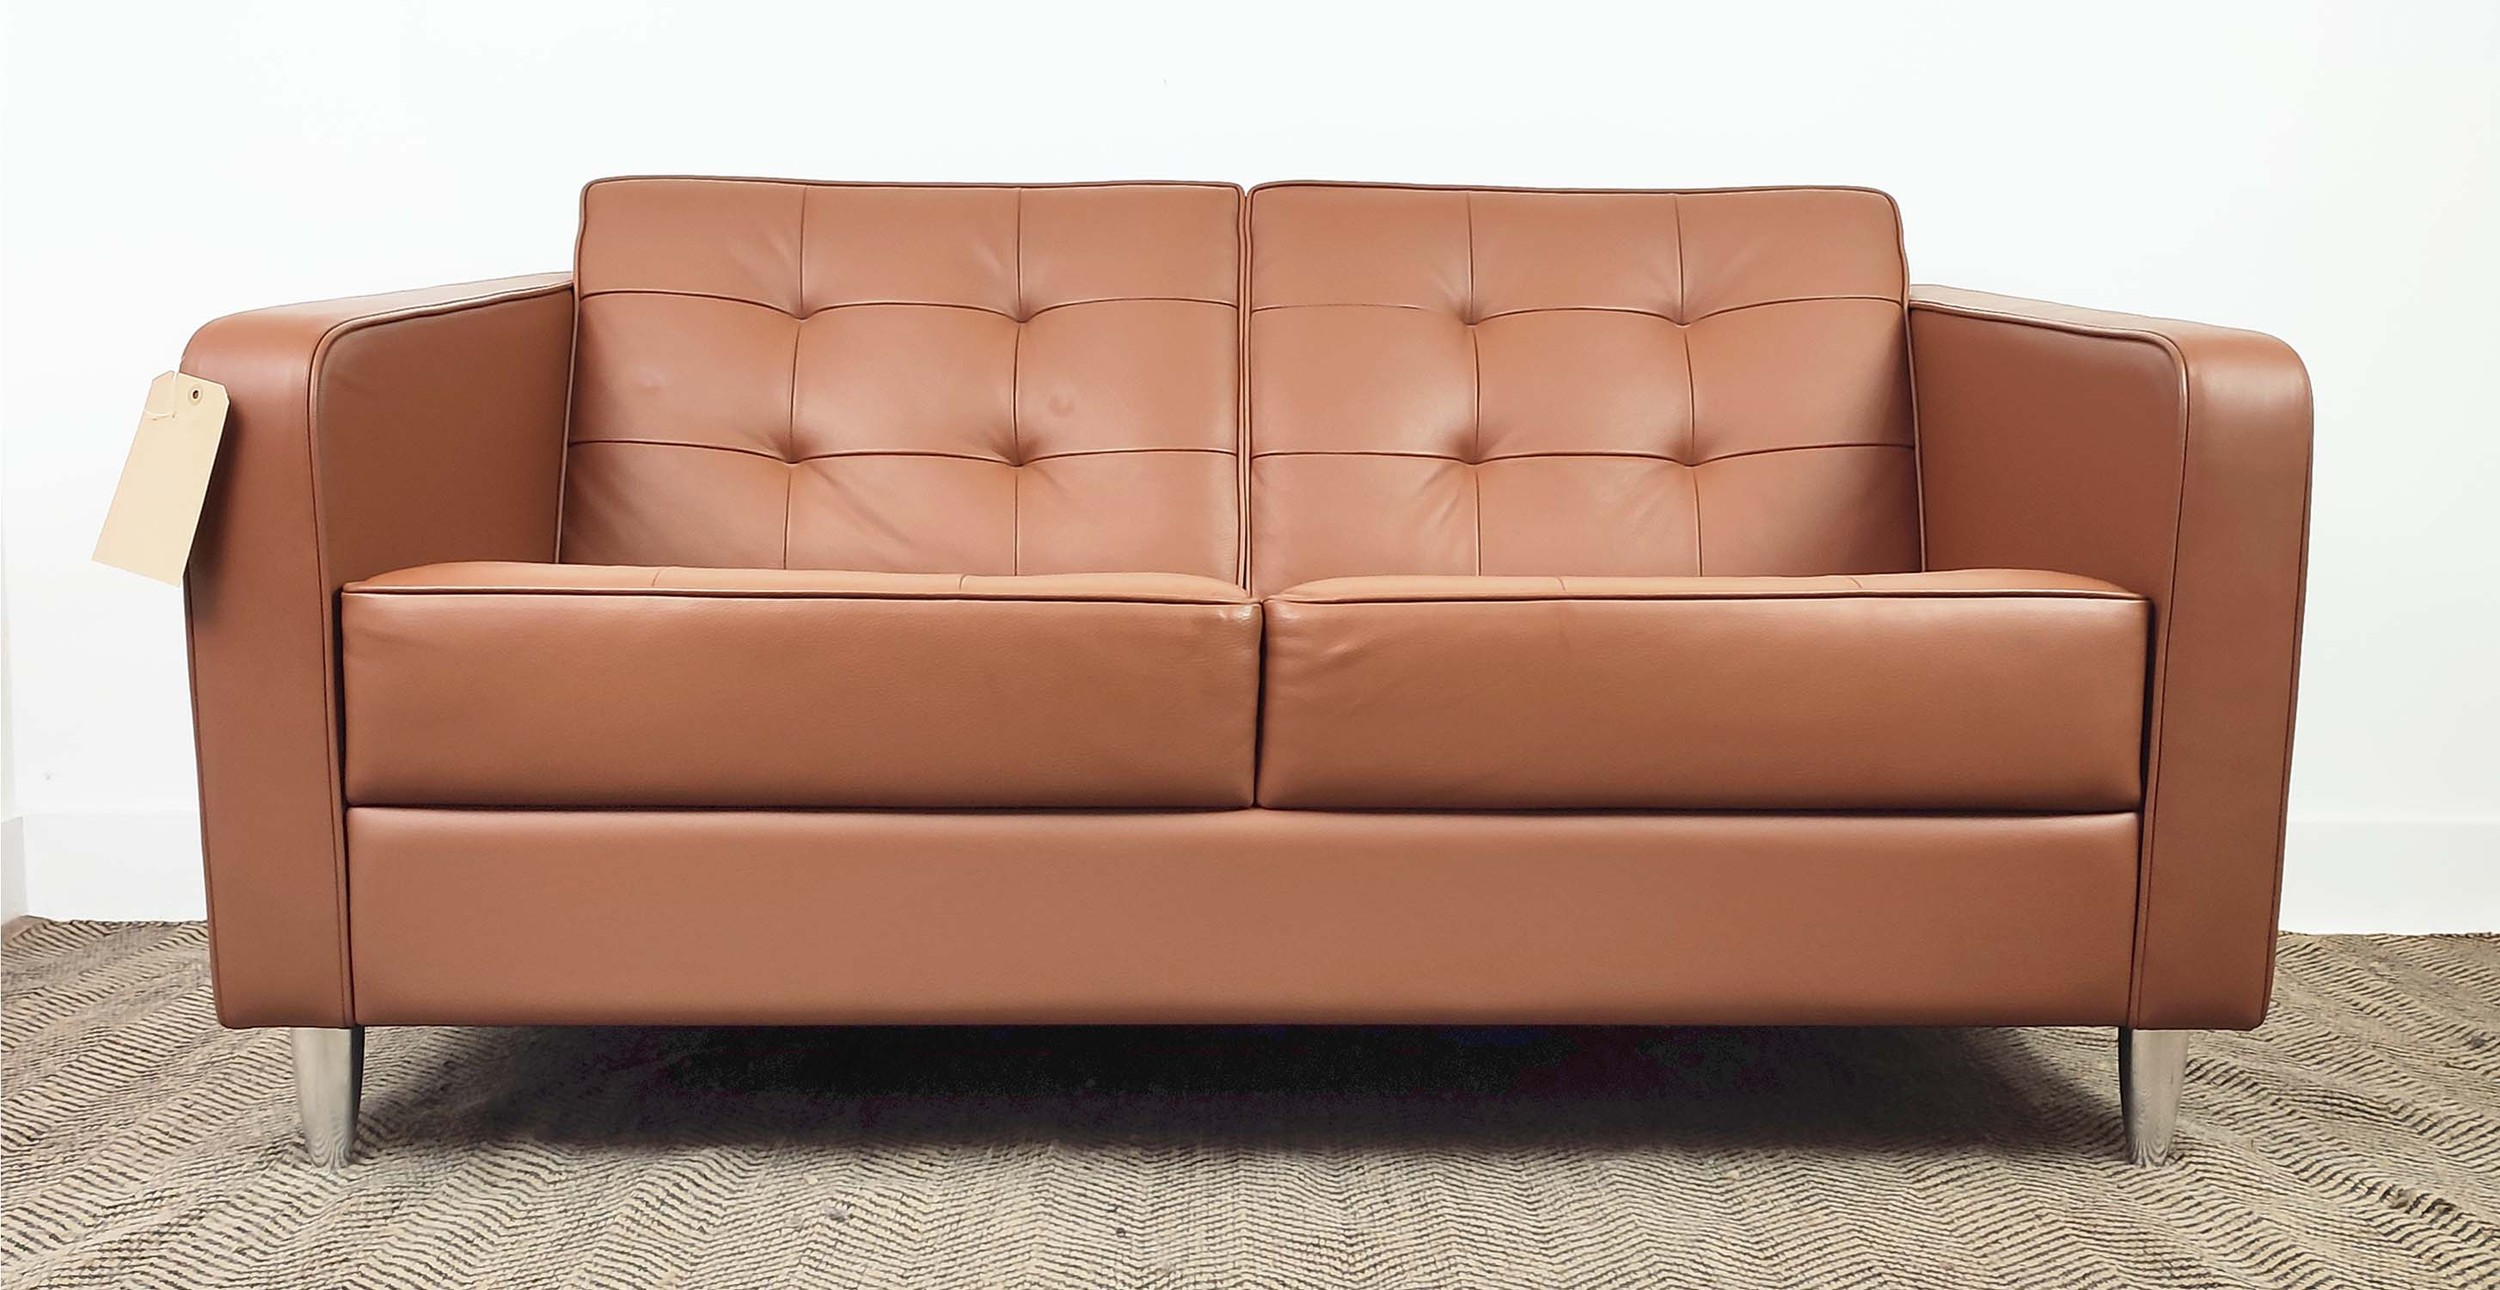 DAVISON HIGHLY SOFA, 142.5cm, tan leather. - Image 2 of 7